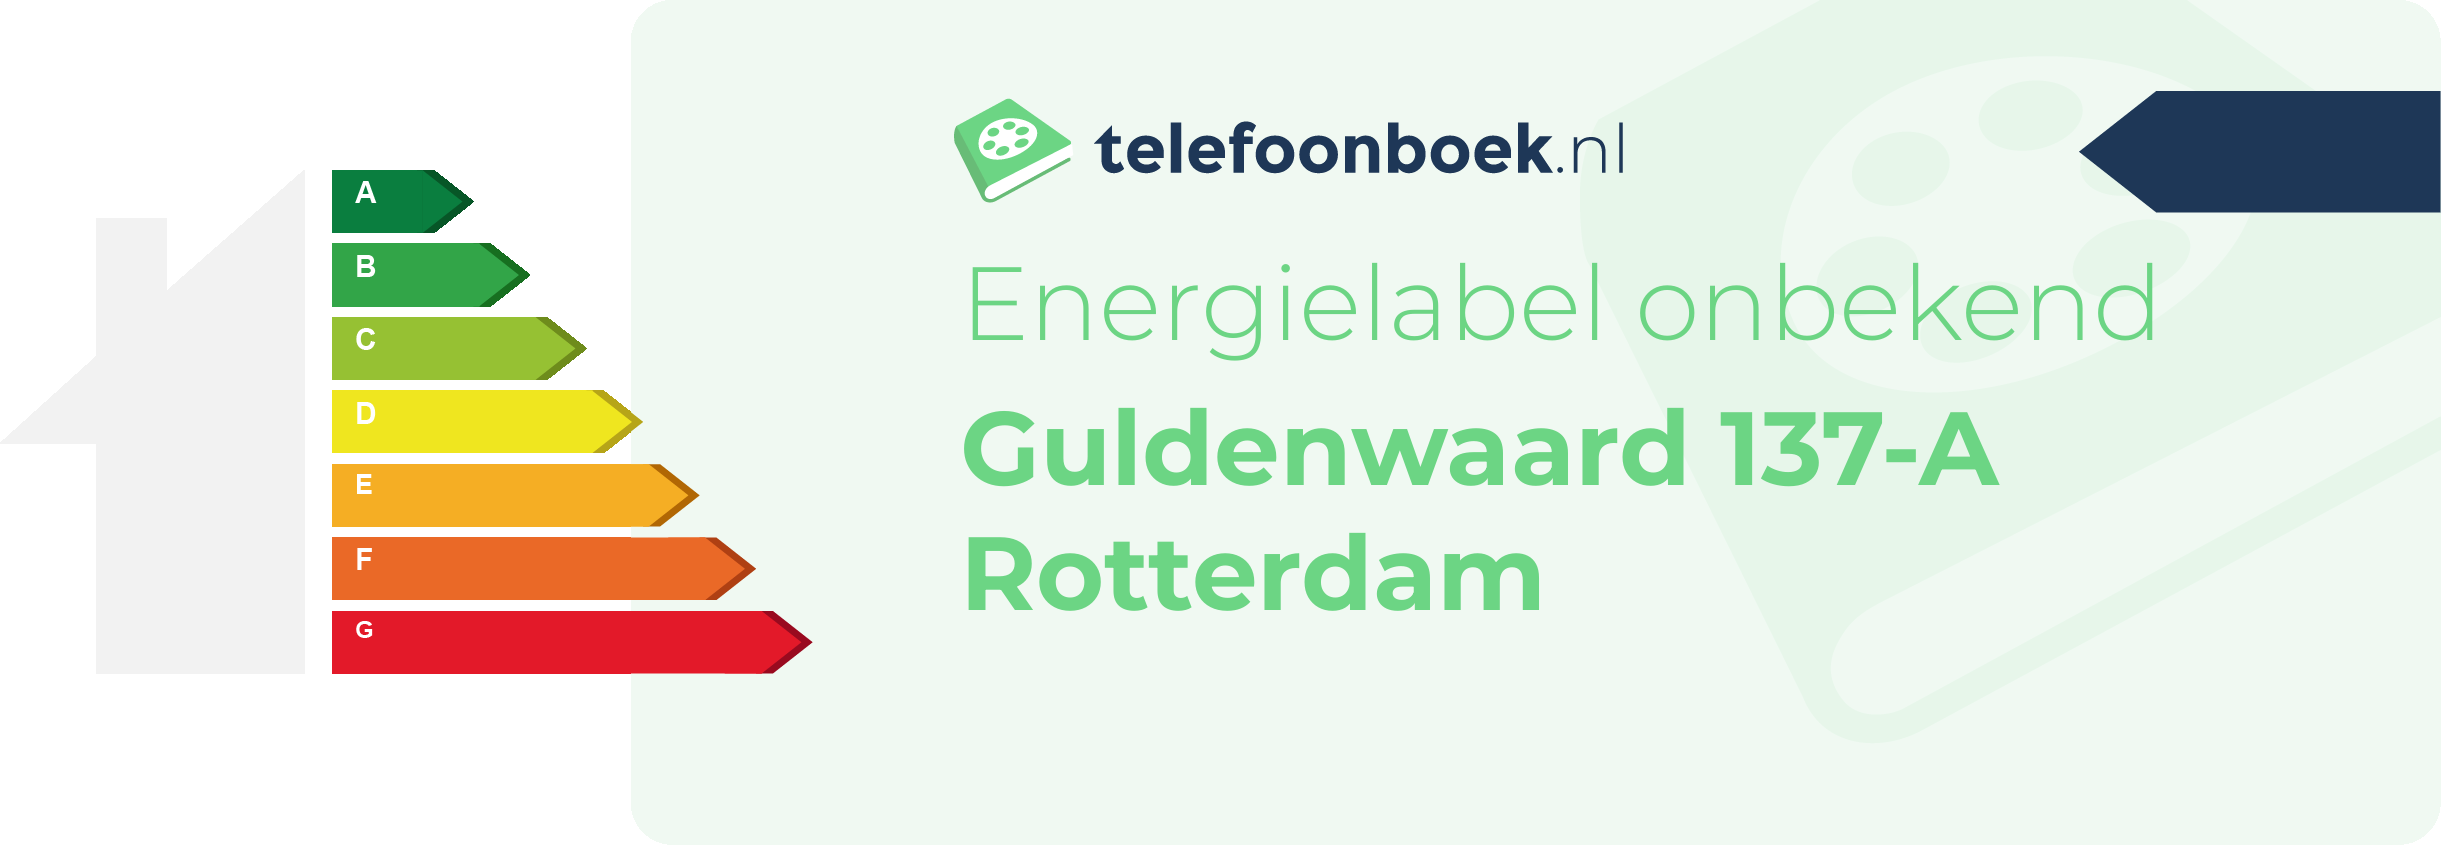 Energielabel Guldenwaard 137-A Rotterdam